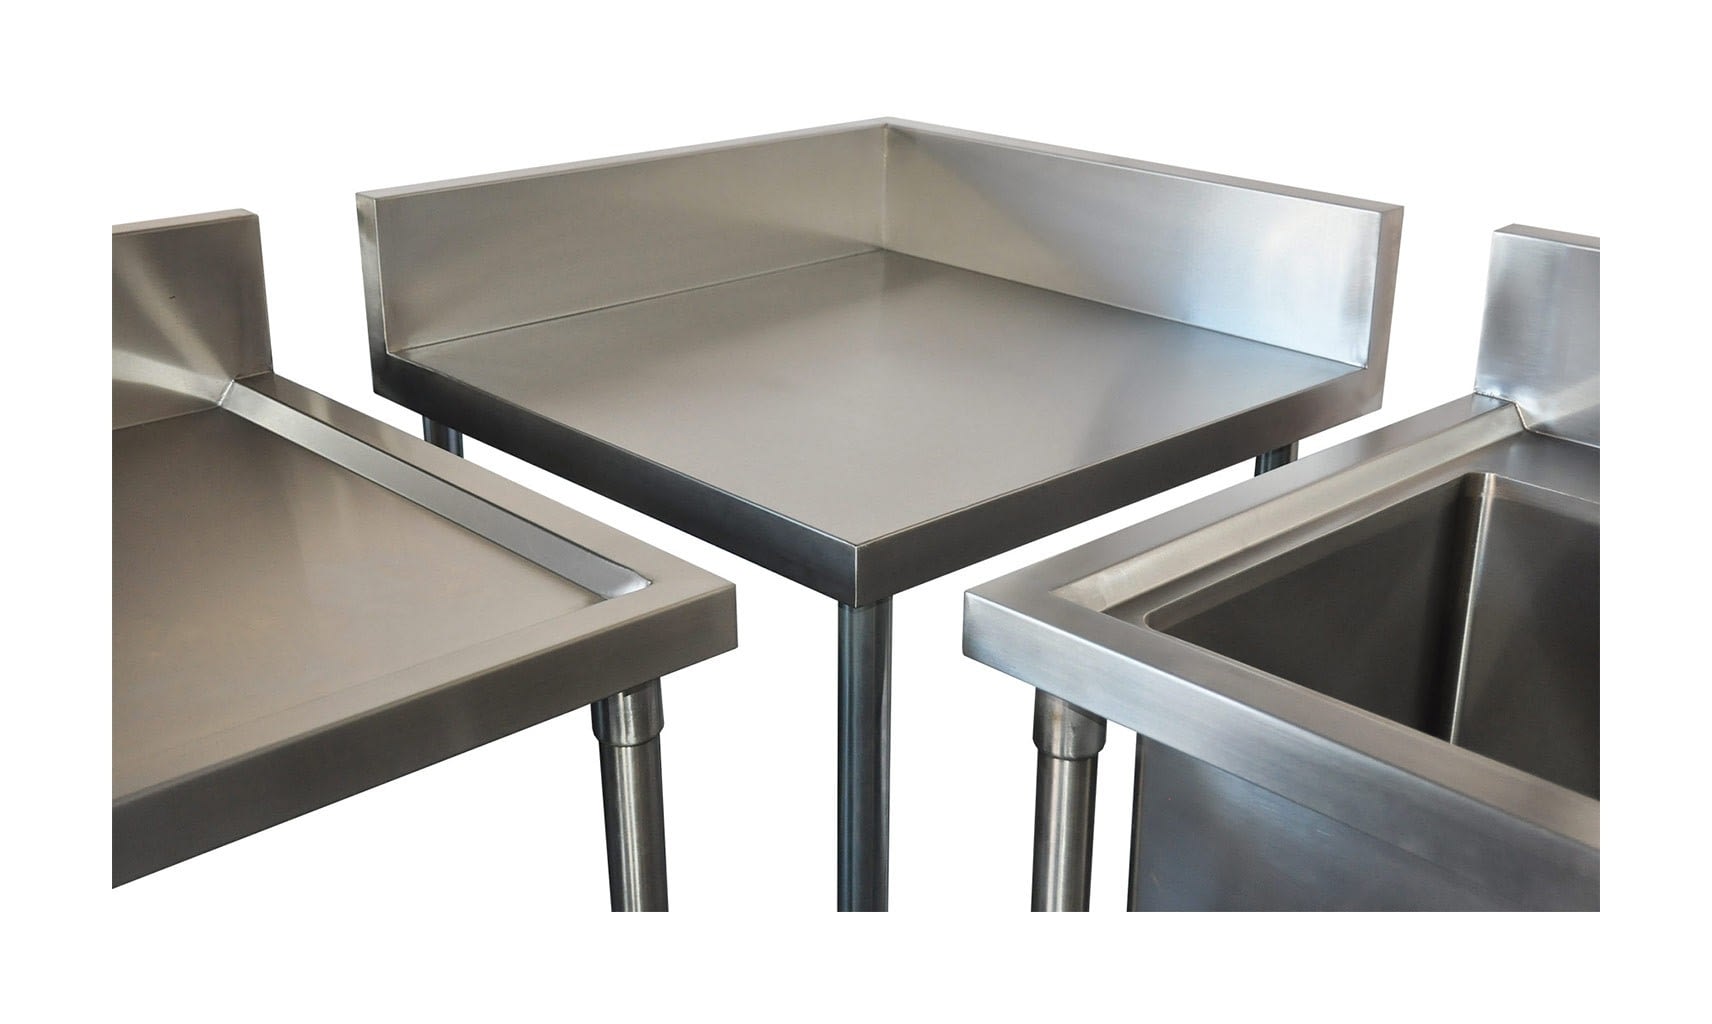 New Stainless Steel Kitchen Bench 700x700x900